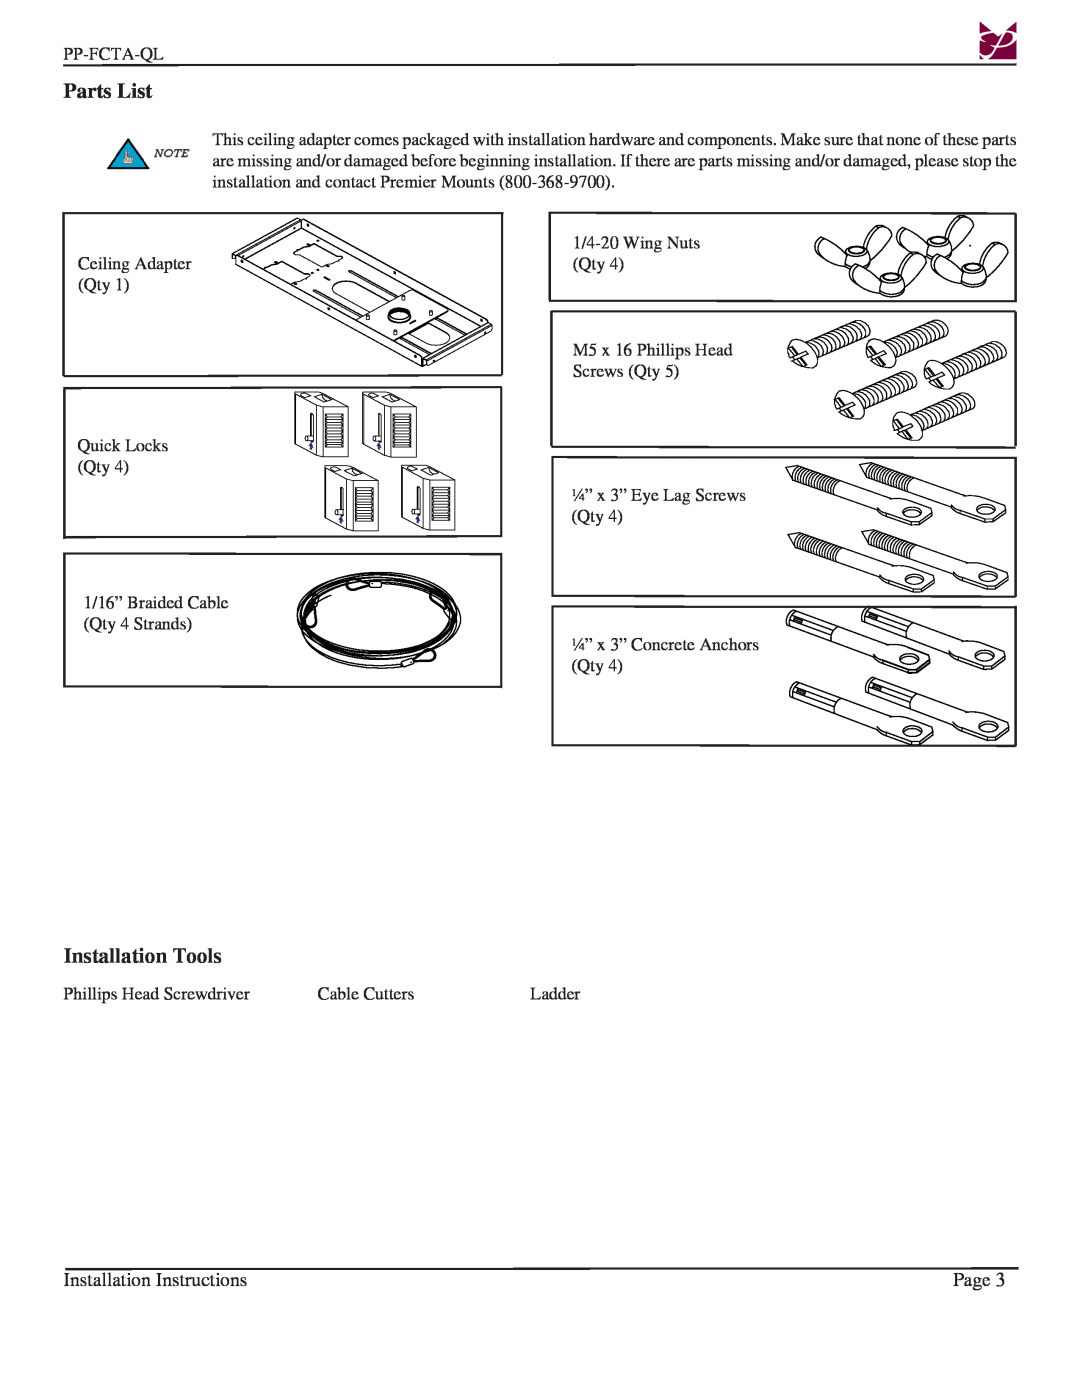 Premier Mounts PP-FCTA-QL installation instructions Parts List, Installation Tools, Installation Instructions, Page 